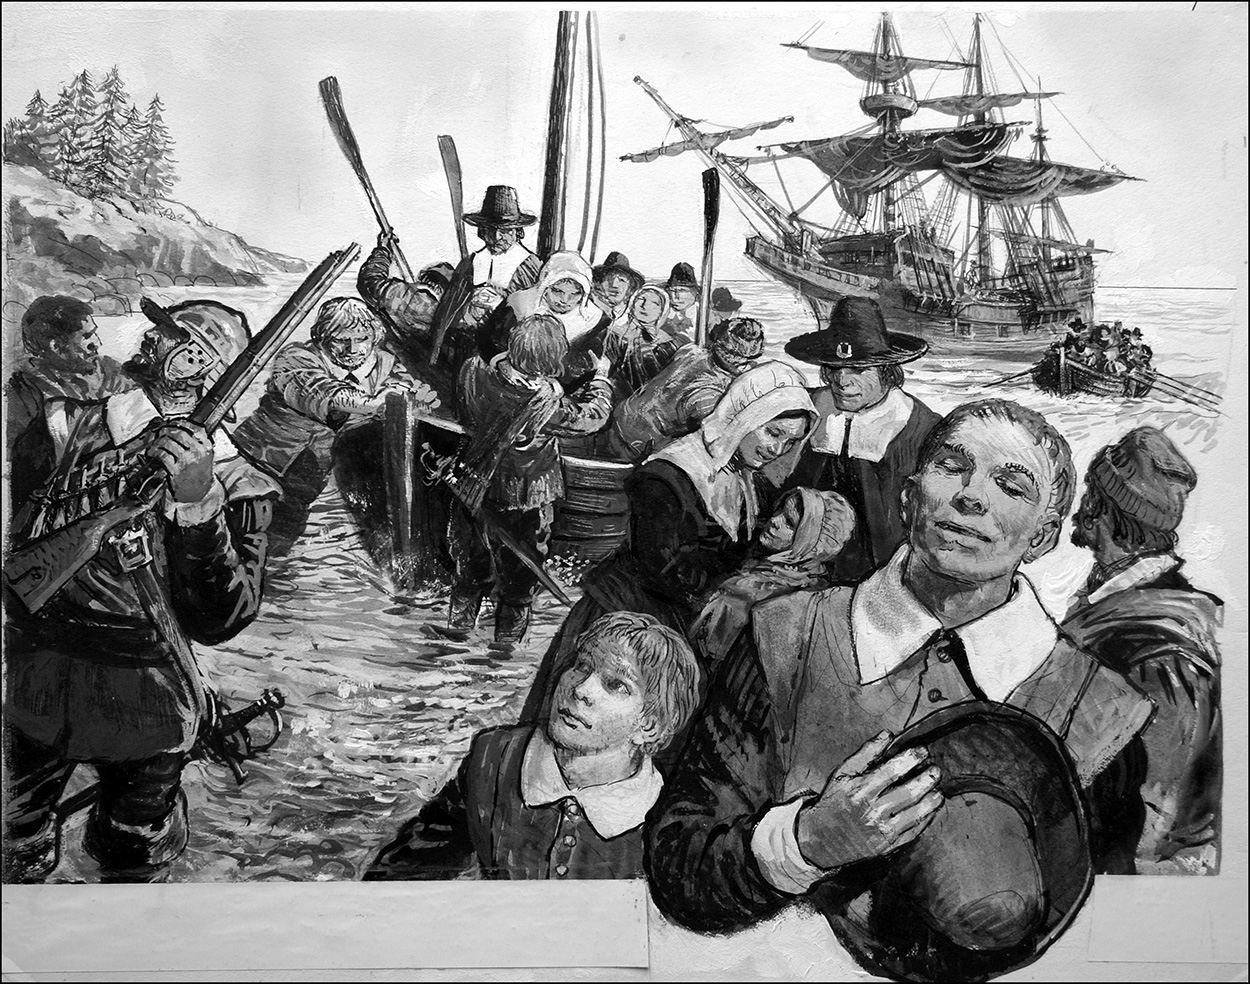 Arrival of the Mayflower (Original) art by Ken Petts Art at The Illustration Art Gallery